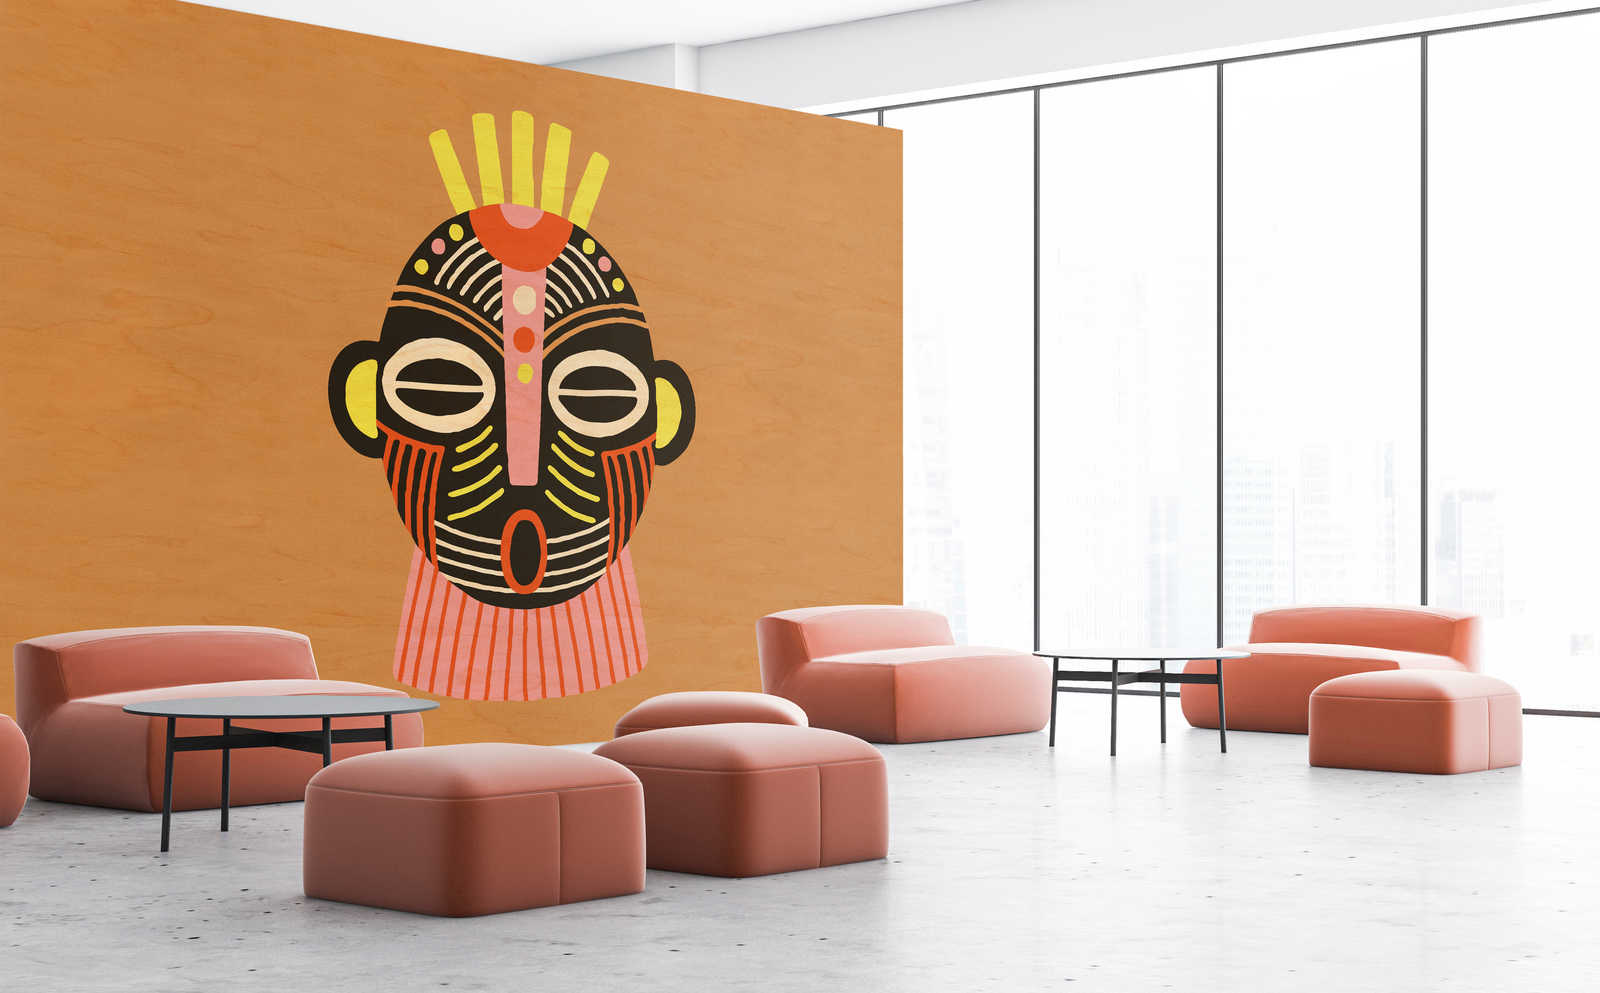             Overseas 4 - photo wallpaper Africa design inspiration mask
        